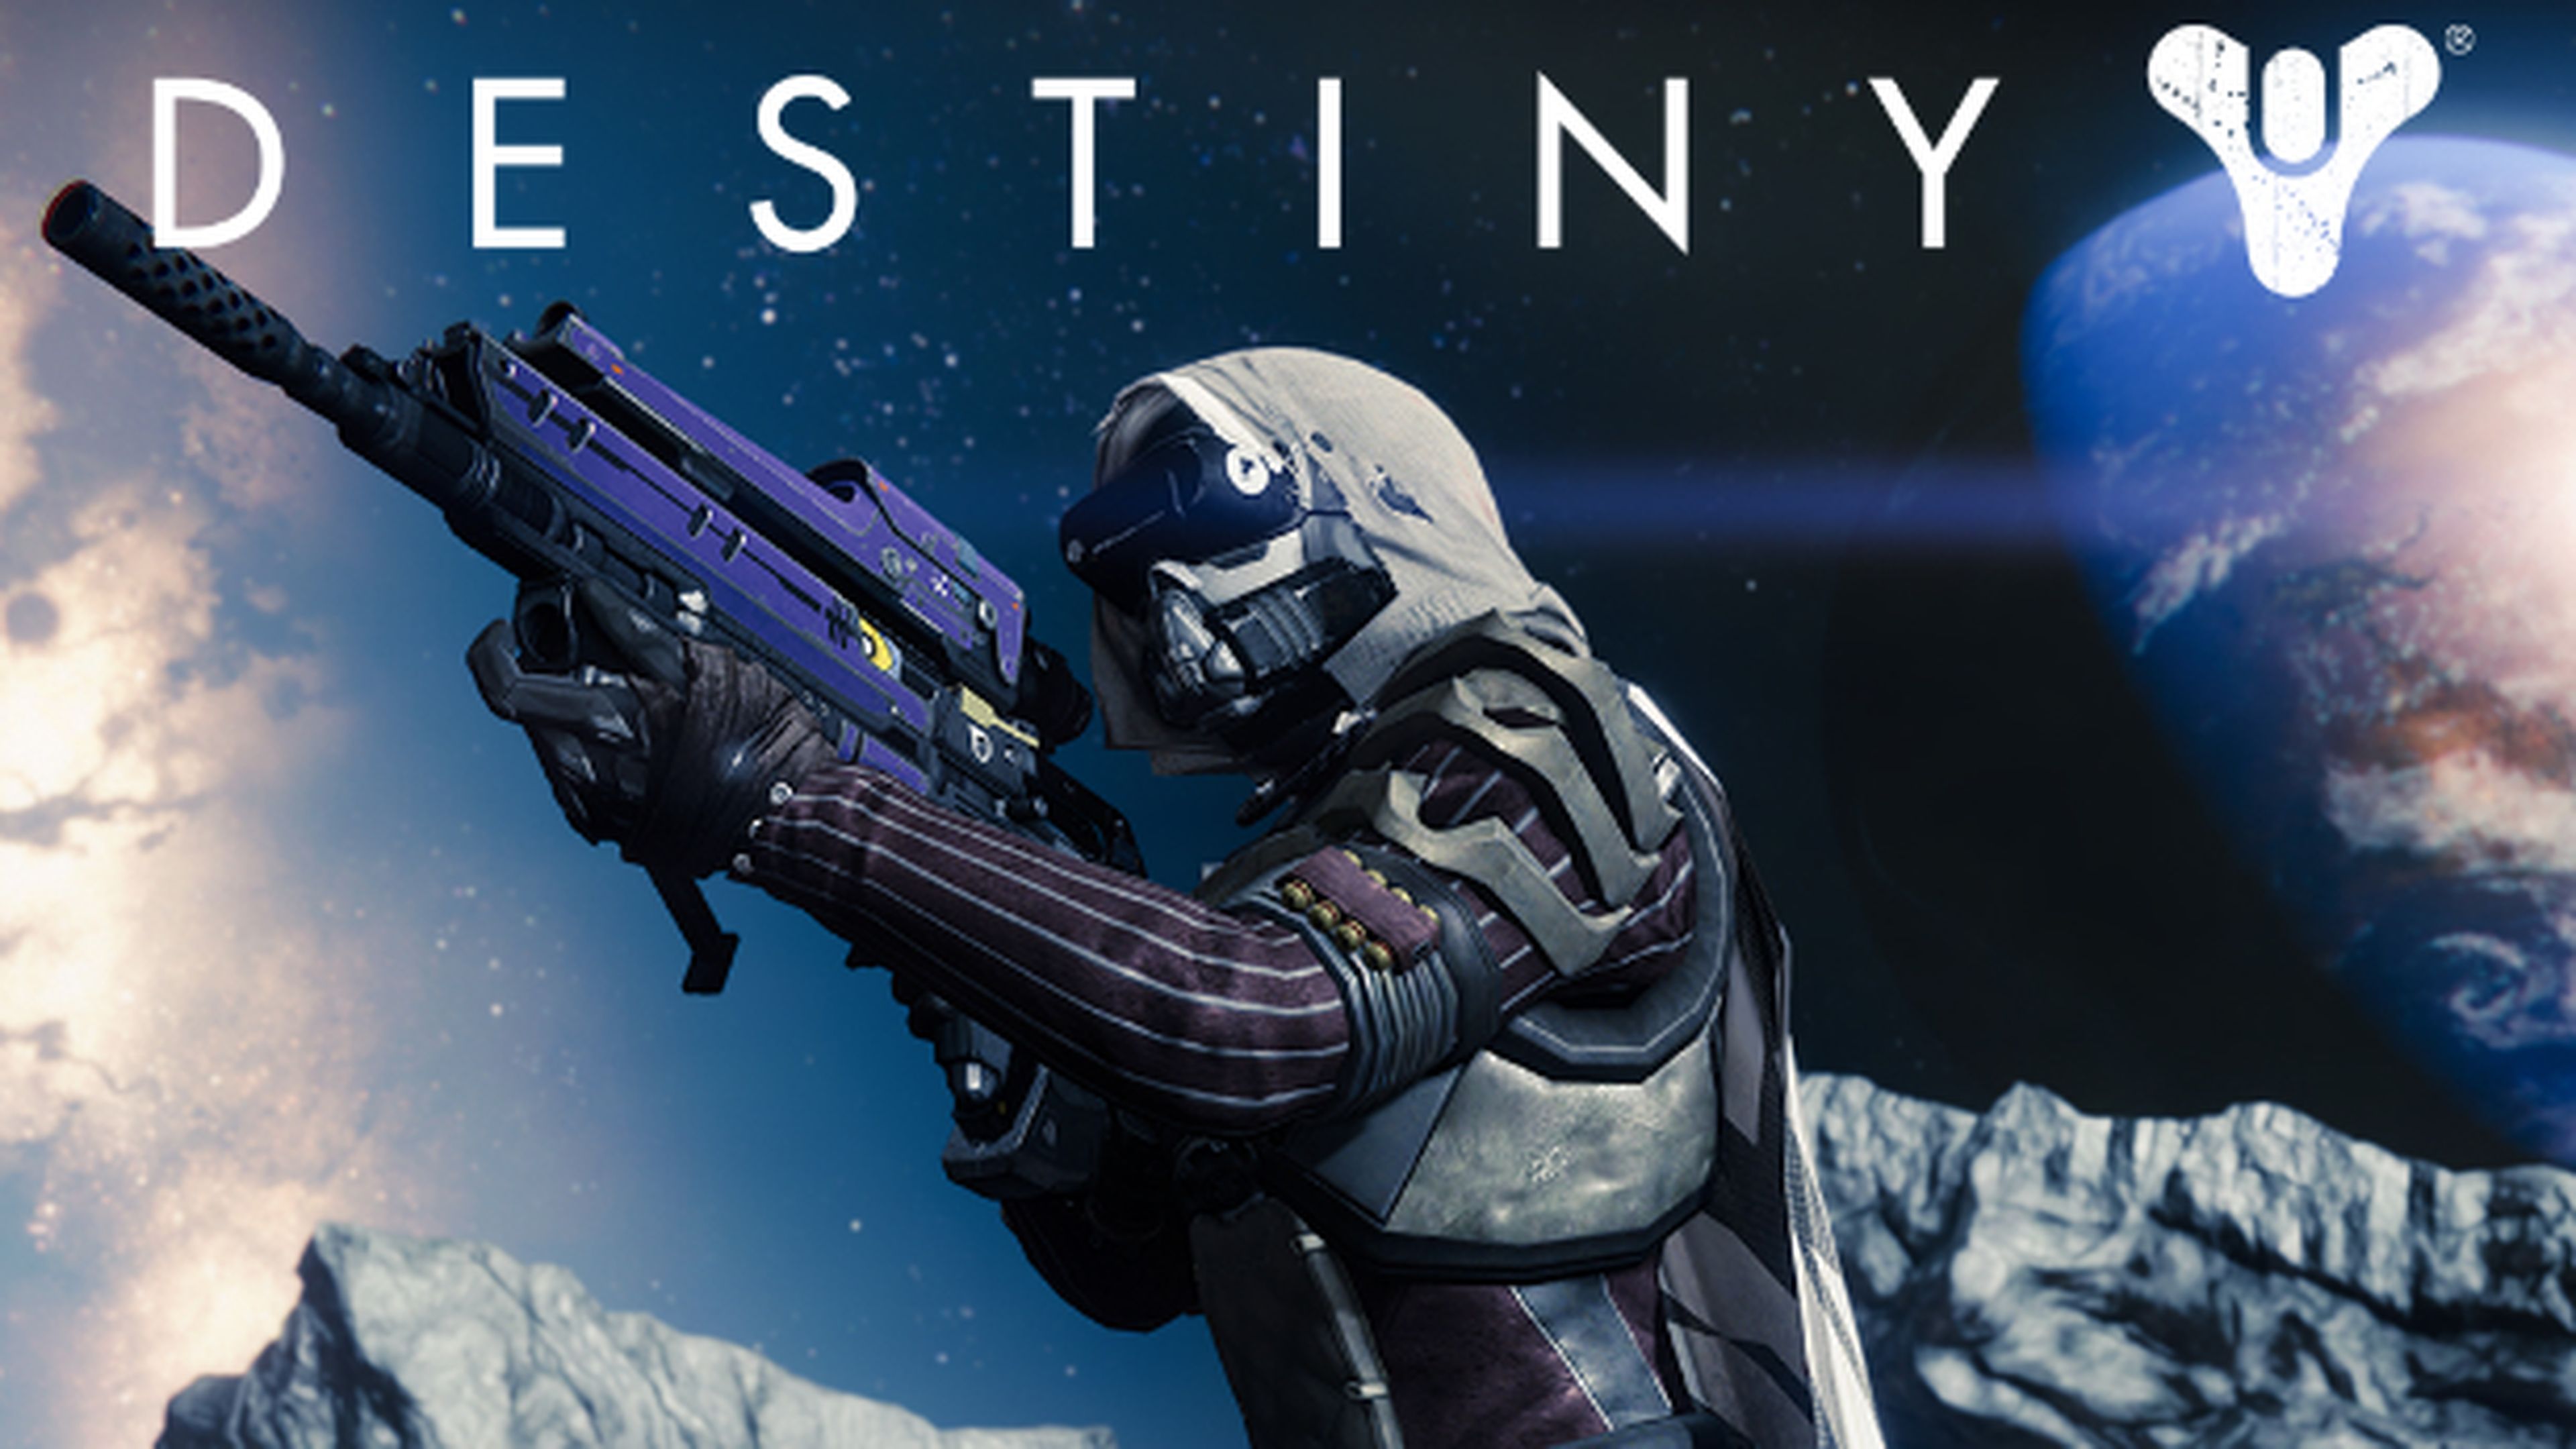 La Beta de Destiny, disponible a principios de 2014